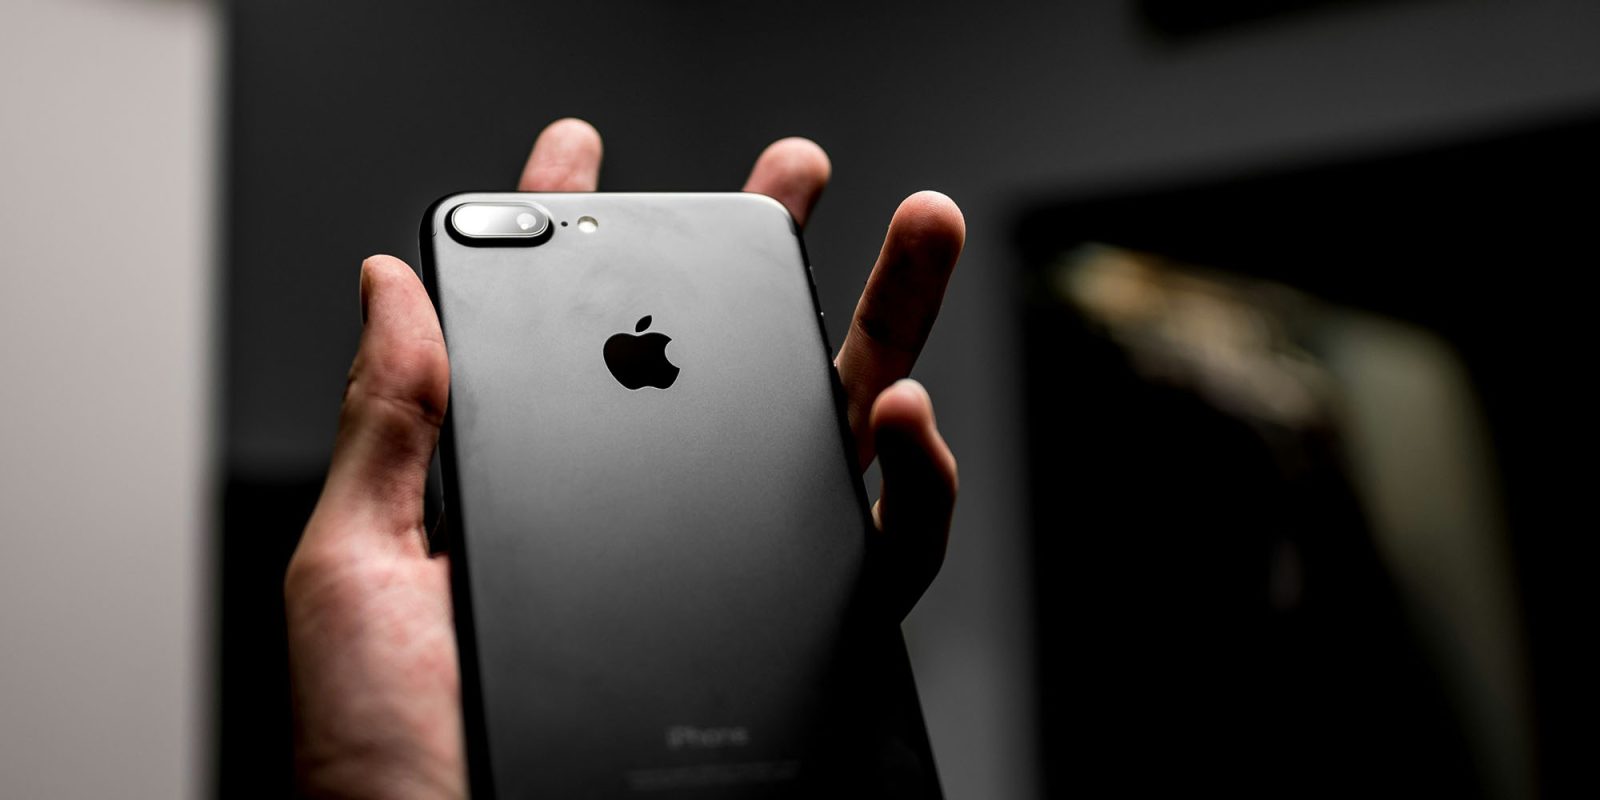 Apple warns of mercenary spyware attacks | Low-key photo of iPhone